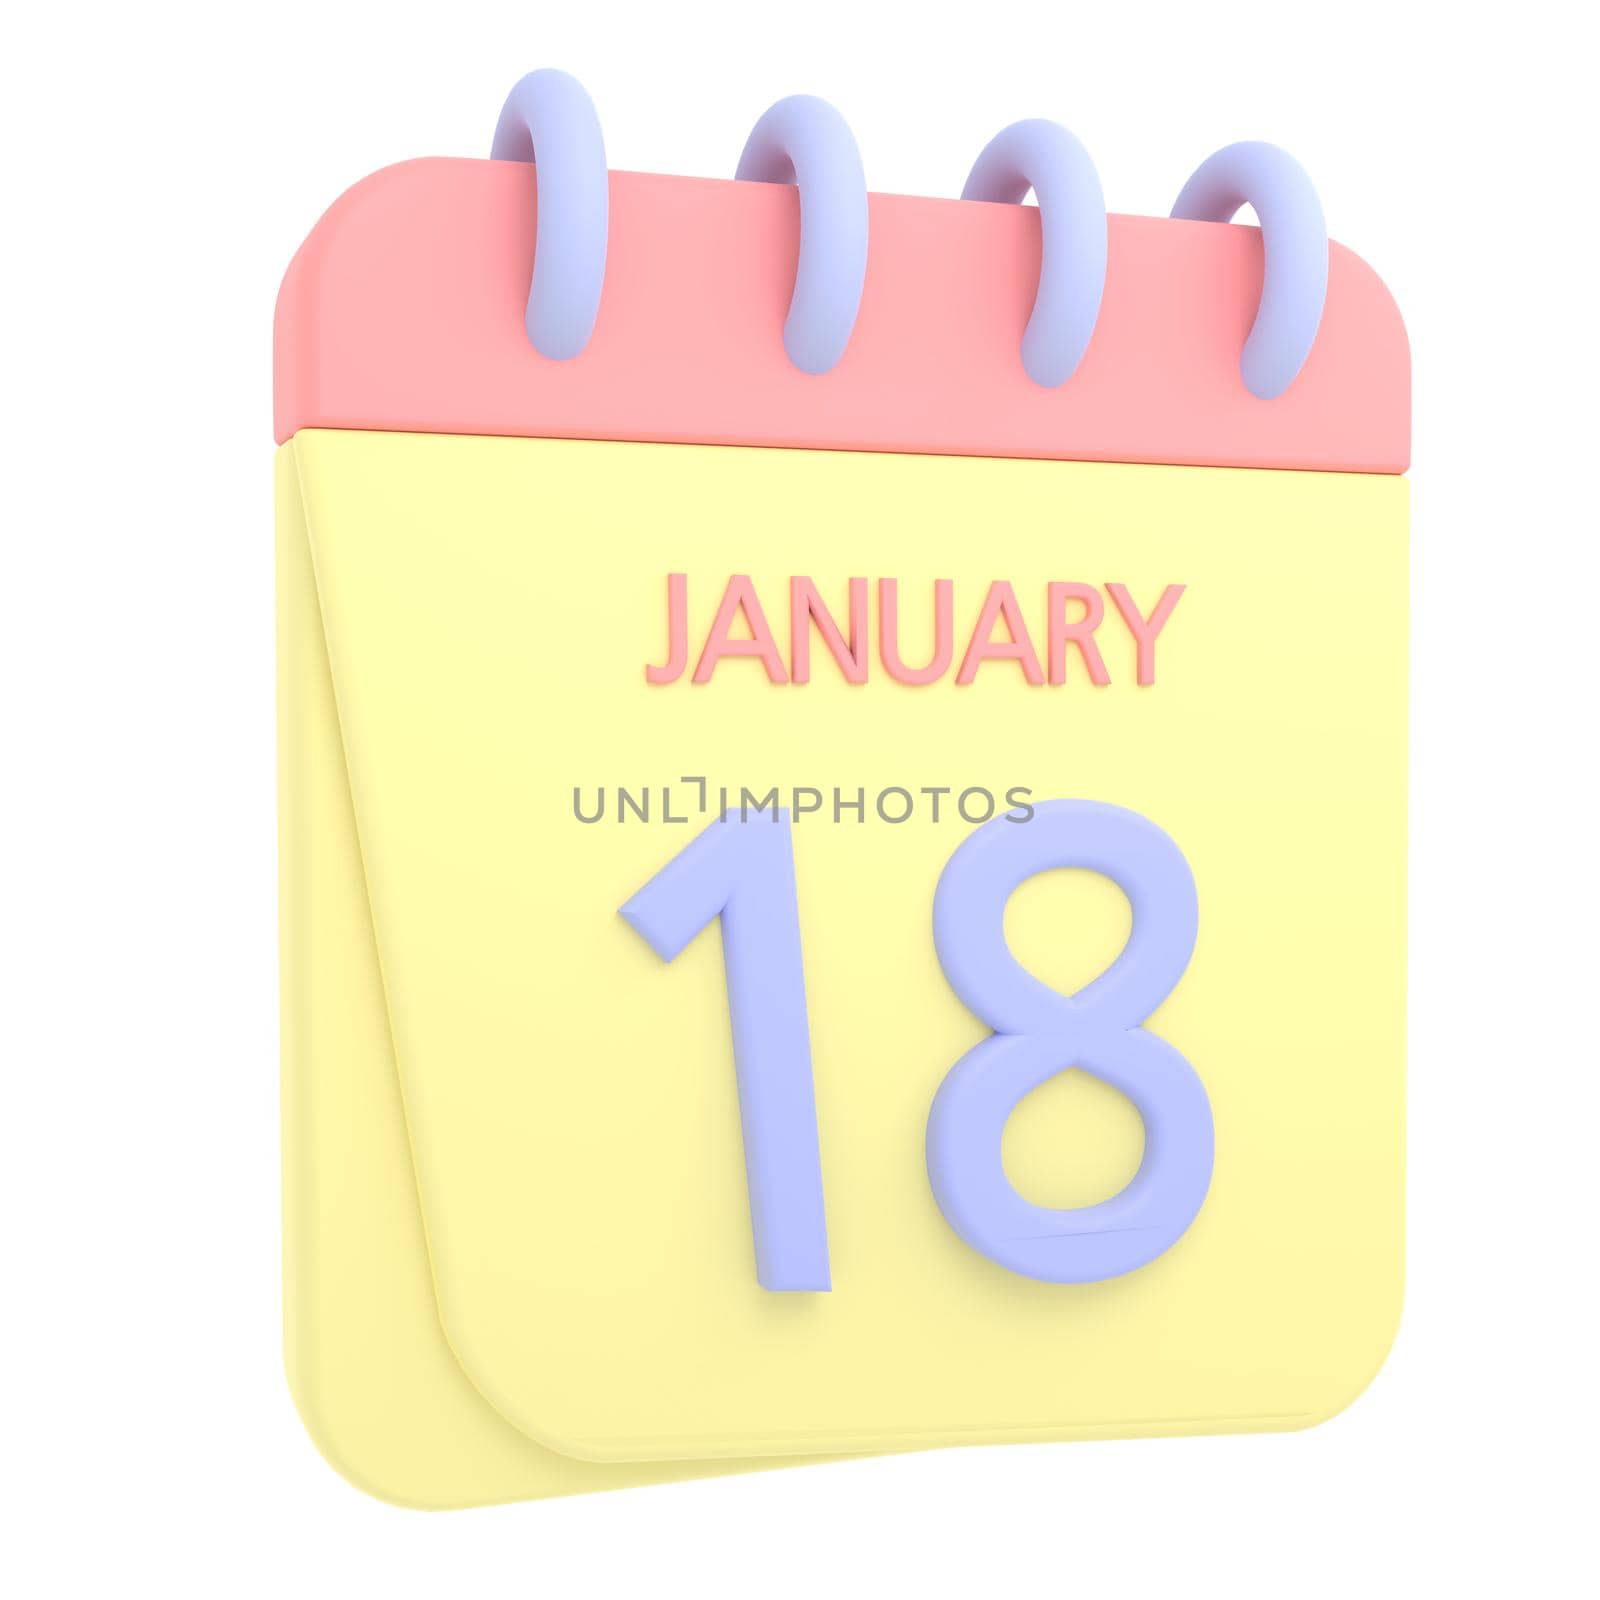 18th January 3D calendar icon by AnnaMarin